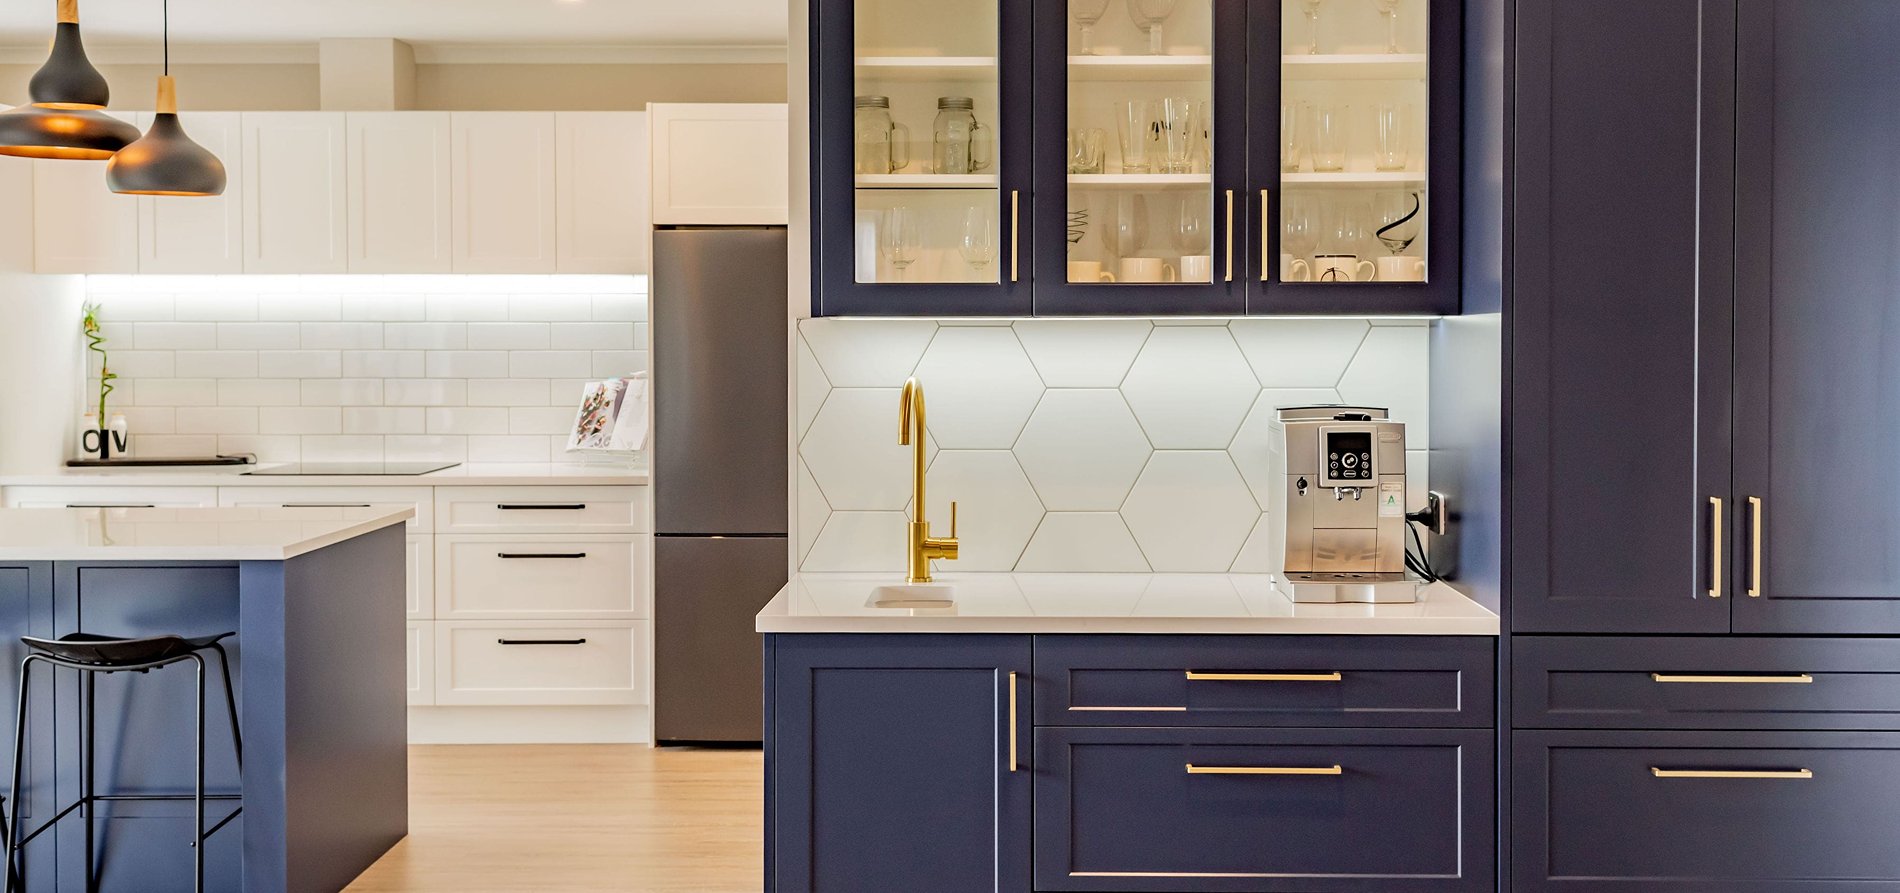 Custom aesthetic kitchen featuring a unique tile backsplash and high-end appliances